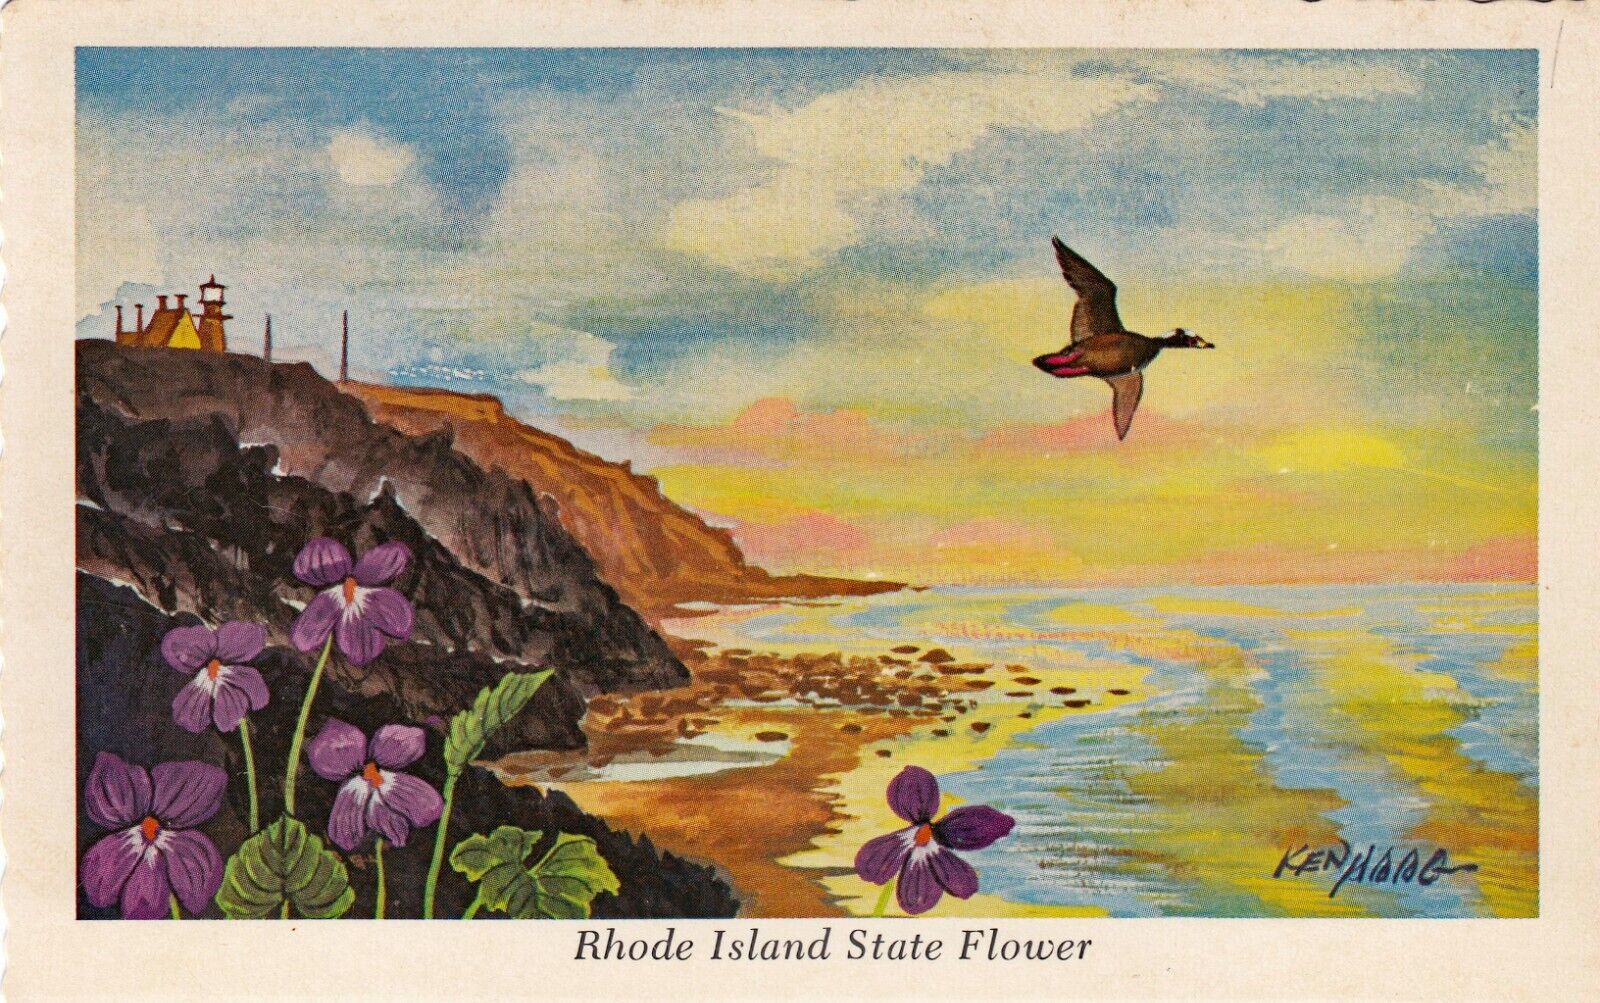 RHODE ISLAND ~ State Flower - The Violet - Adopted 1897 - Artist Signed Ken Haag